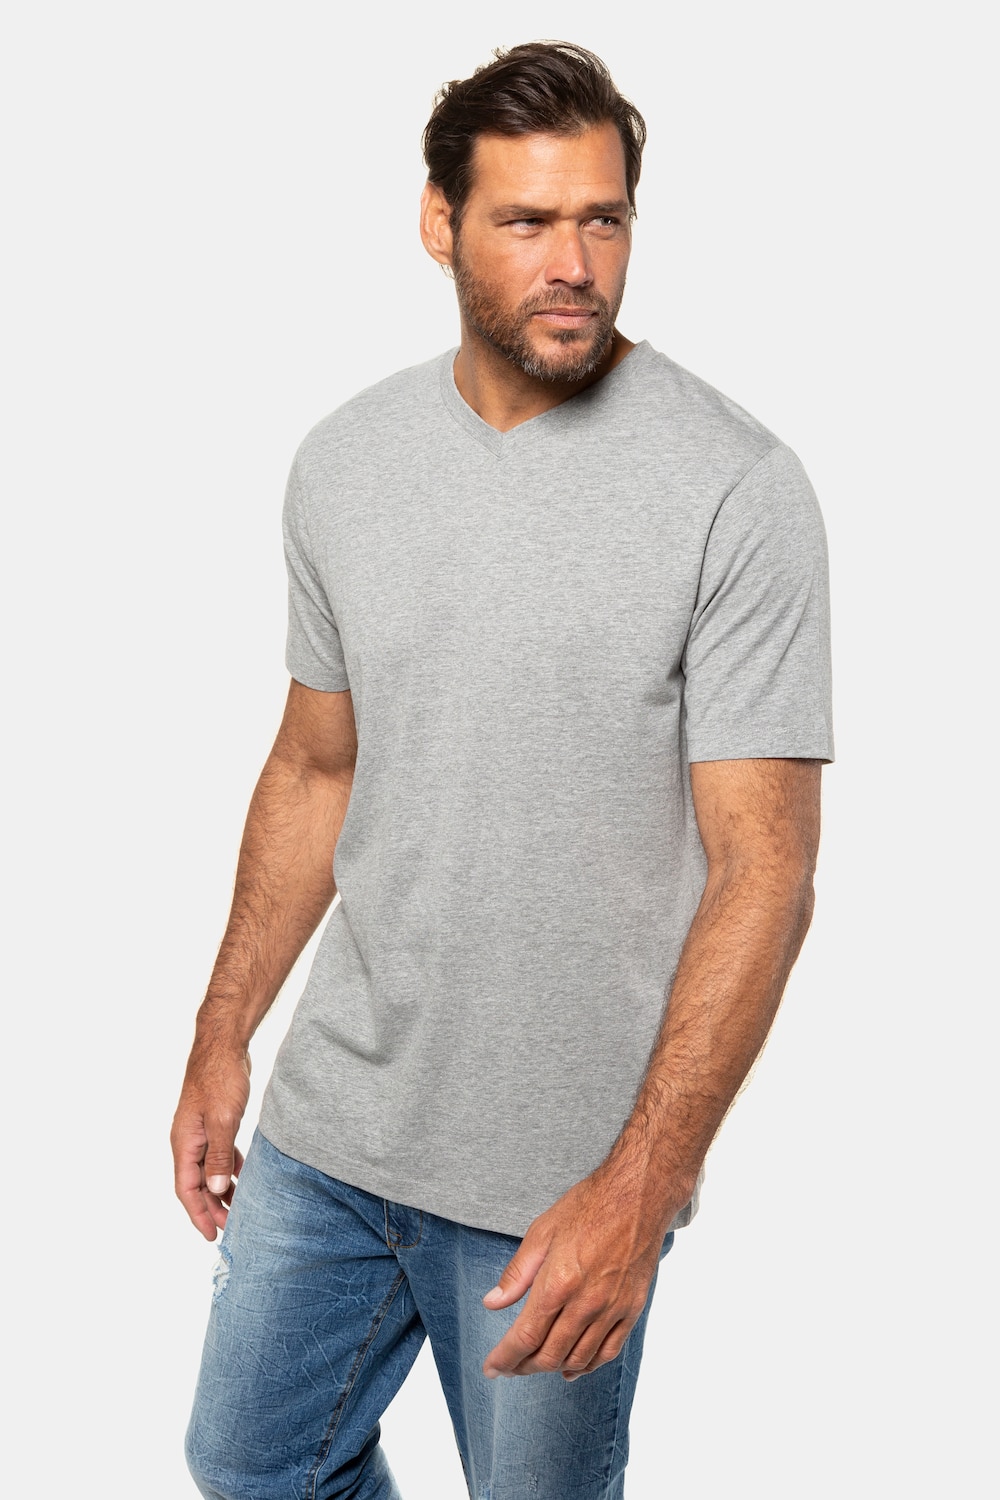 Grote Maten T-shirt, Heren, grijs, Maat: 7XL, Katoen/Polyester/Viscose, JP1880